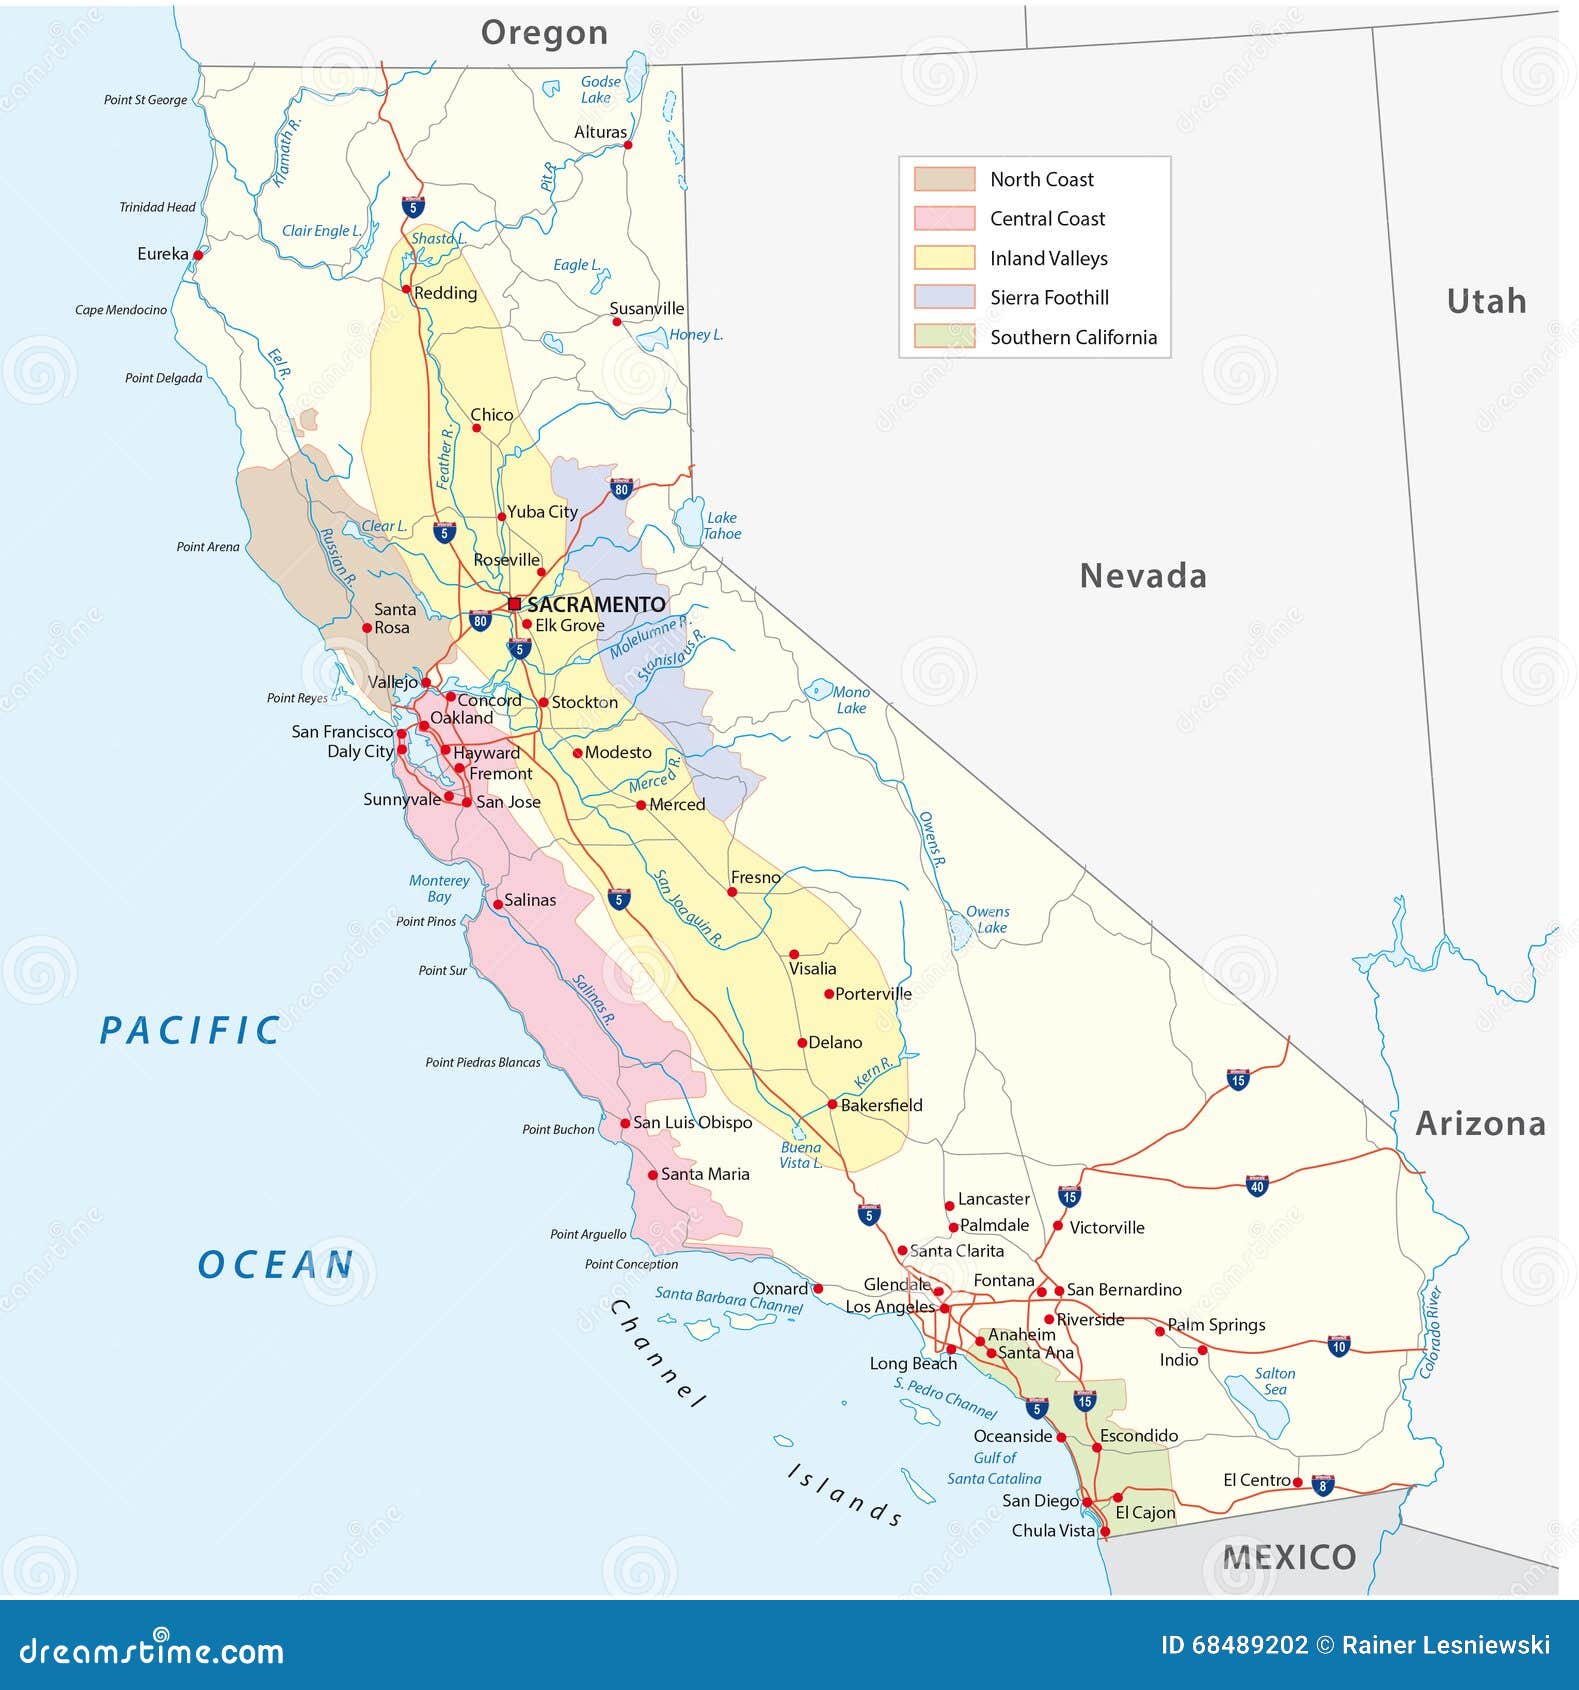 california's wine-growing regions map